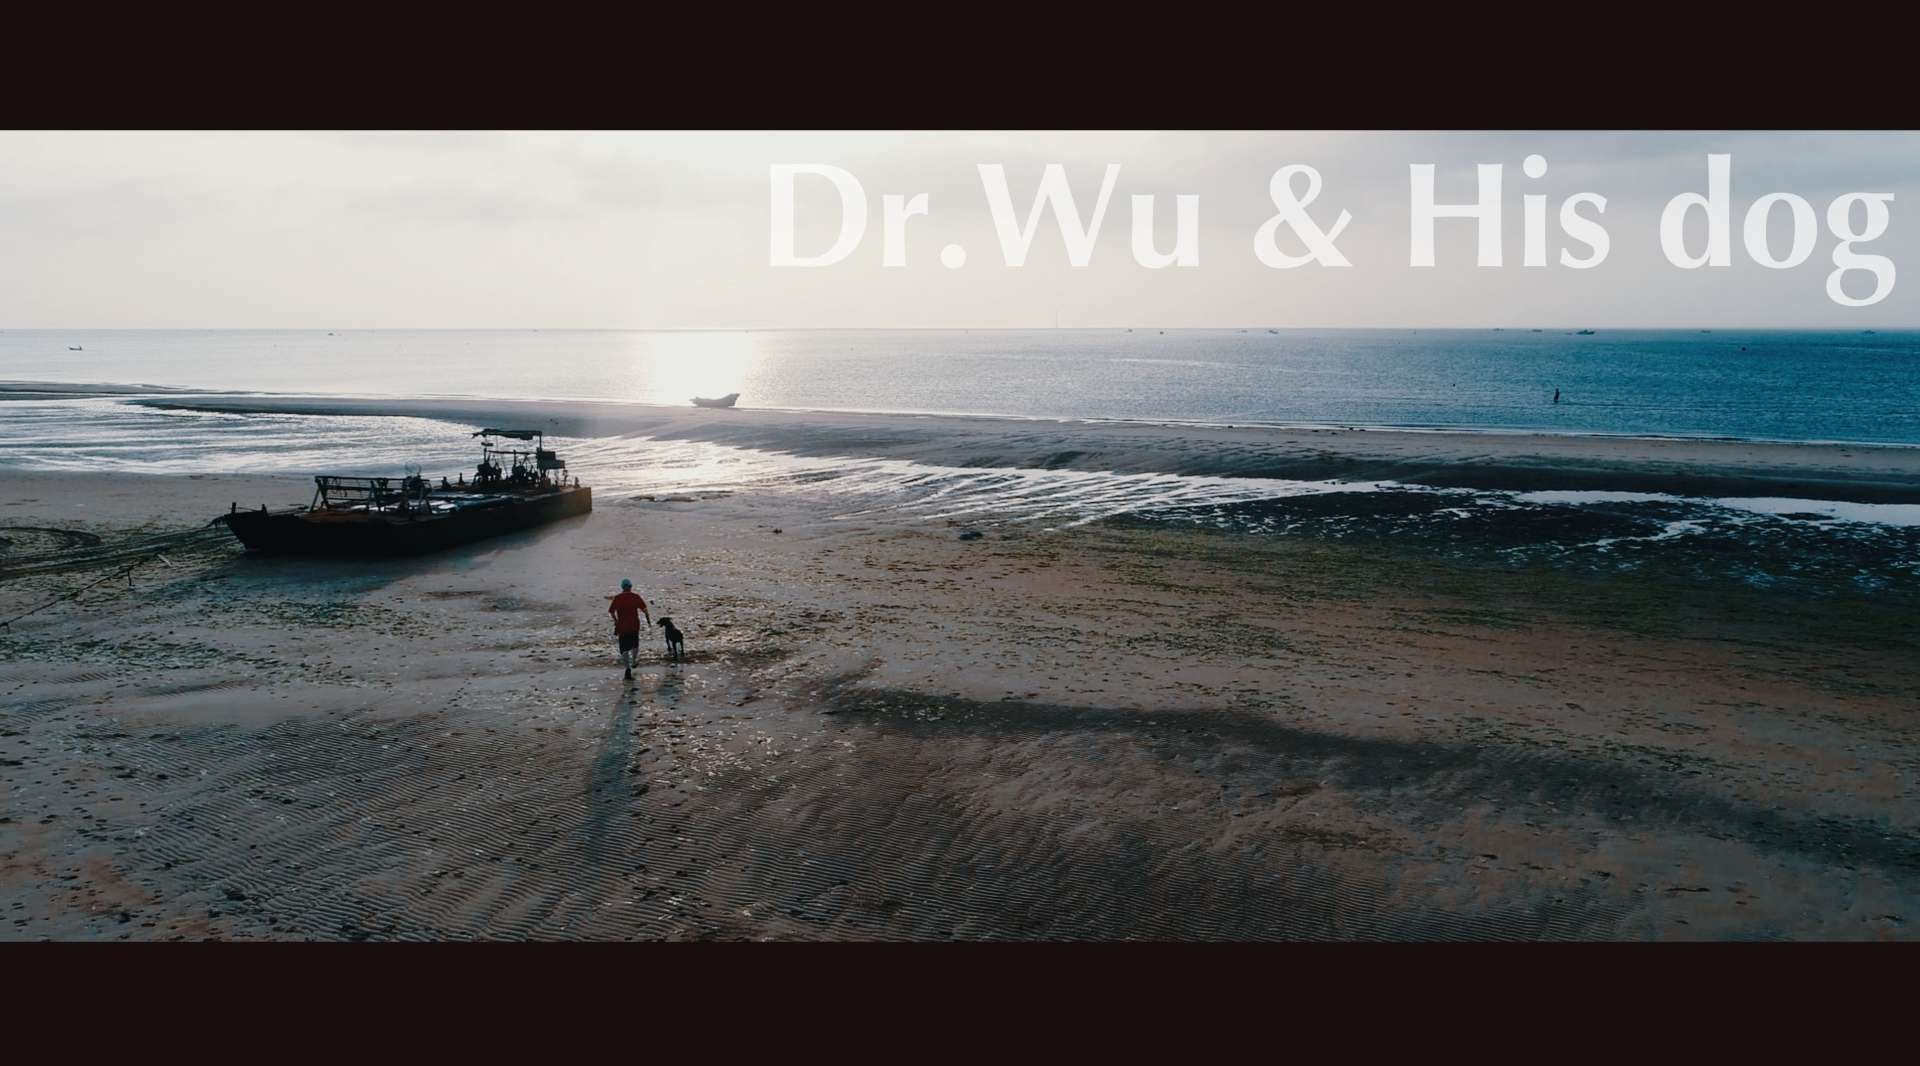 Dr.Wu & His dog